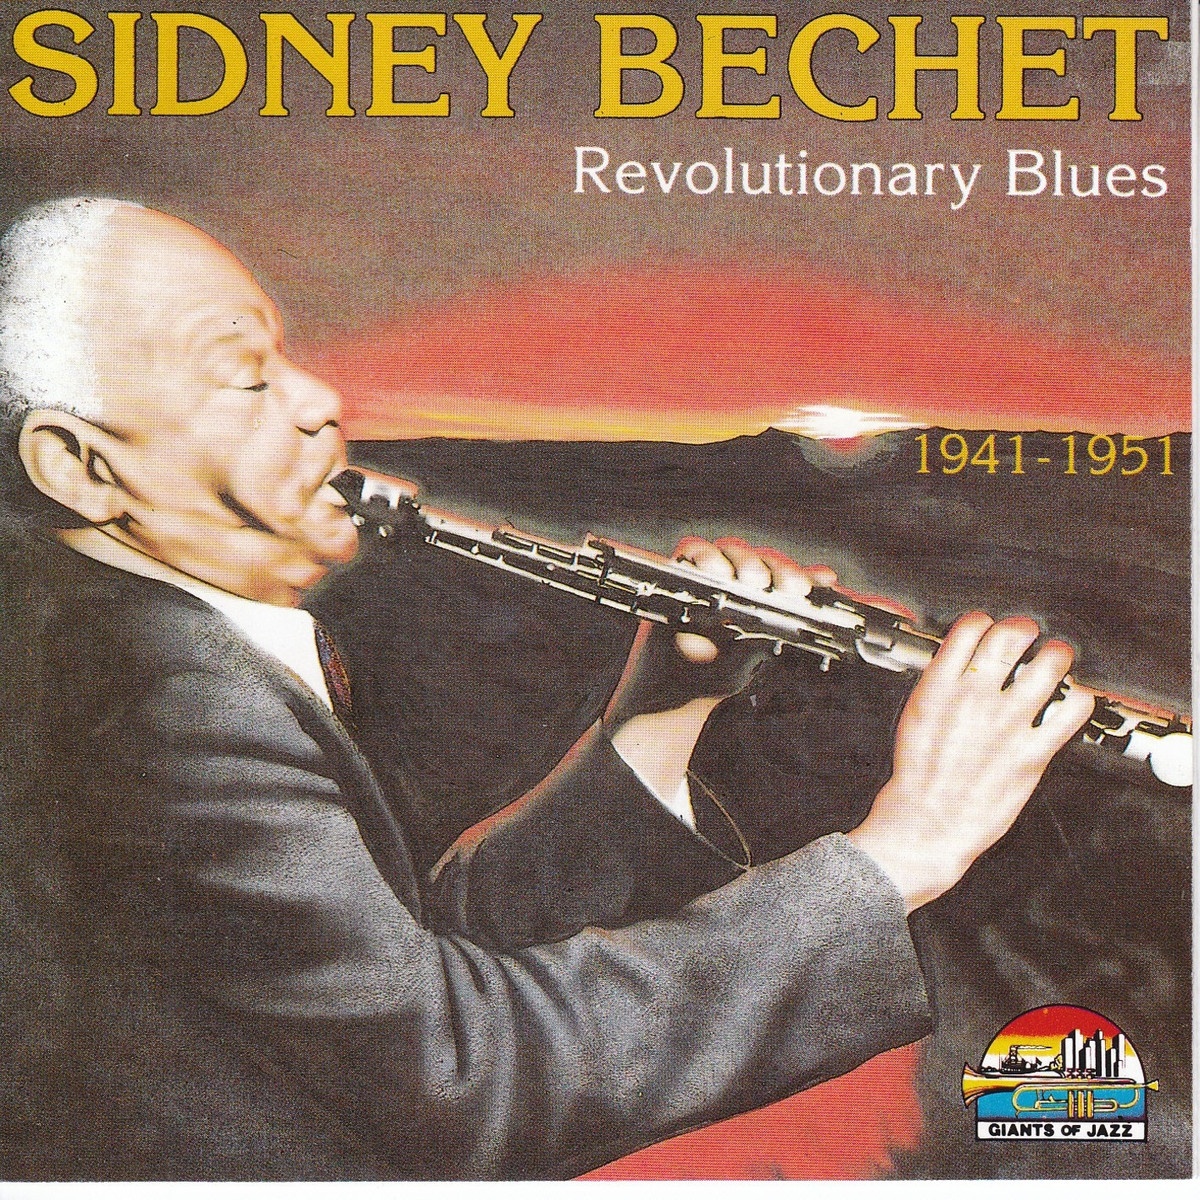 Revolutionary Blues (1941 - 1951)